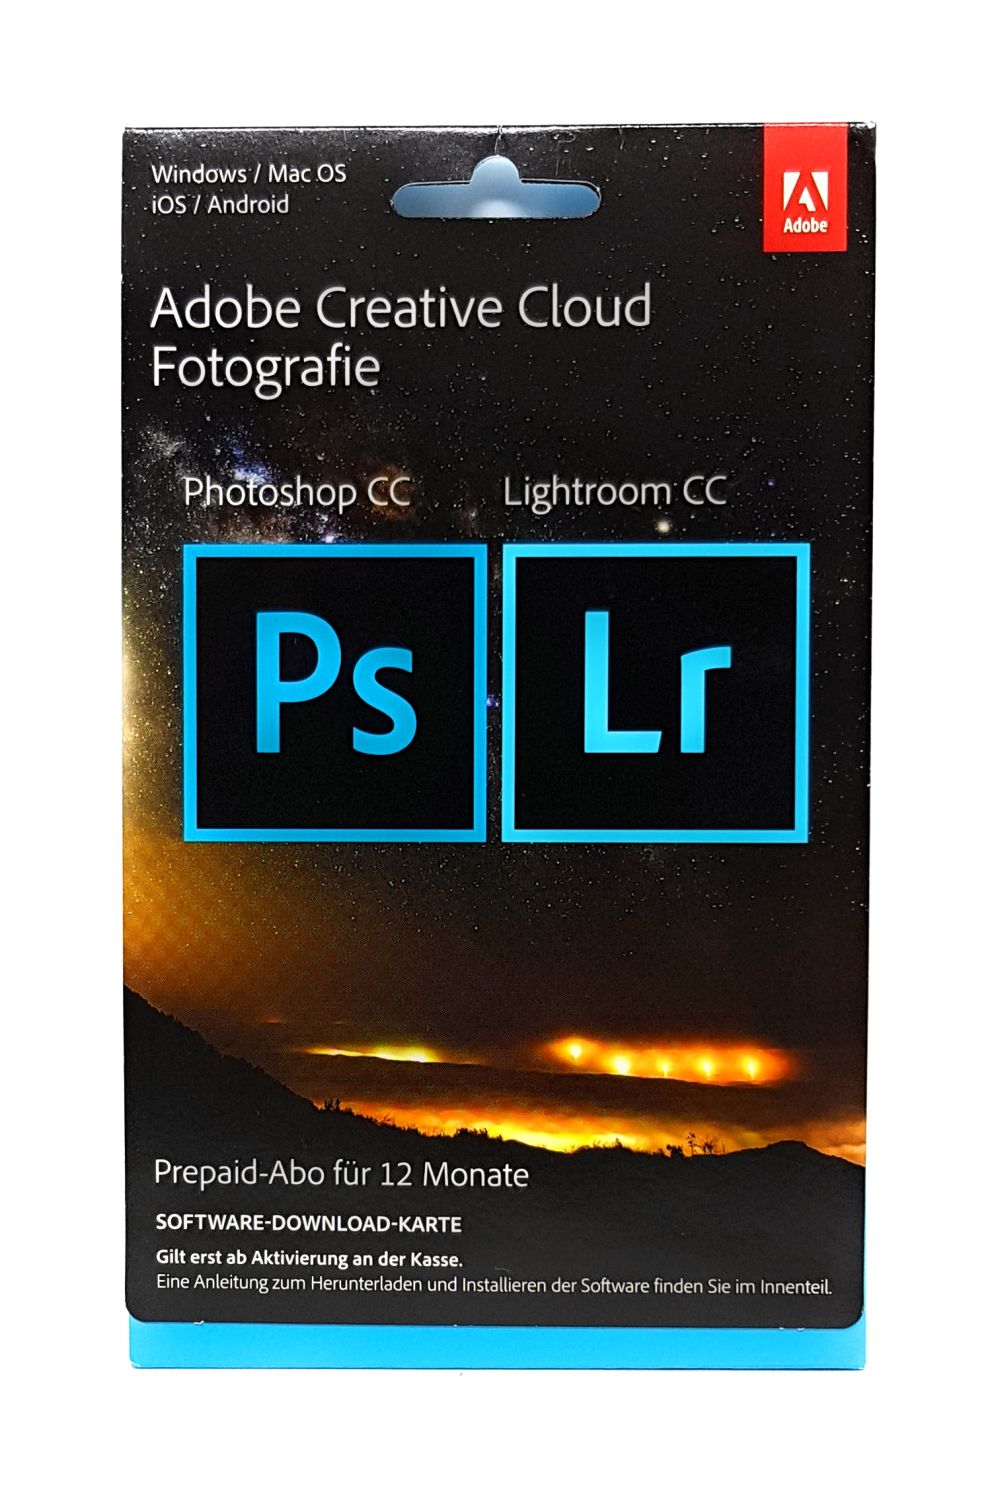 Details Zu Adobe Creative Cloud Foto Photoshop Lightroom Cc 20gb 1 Jahr Key Download